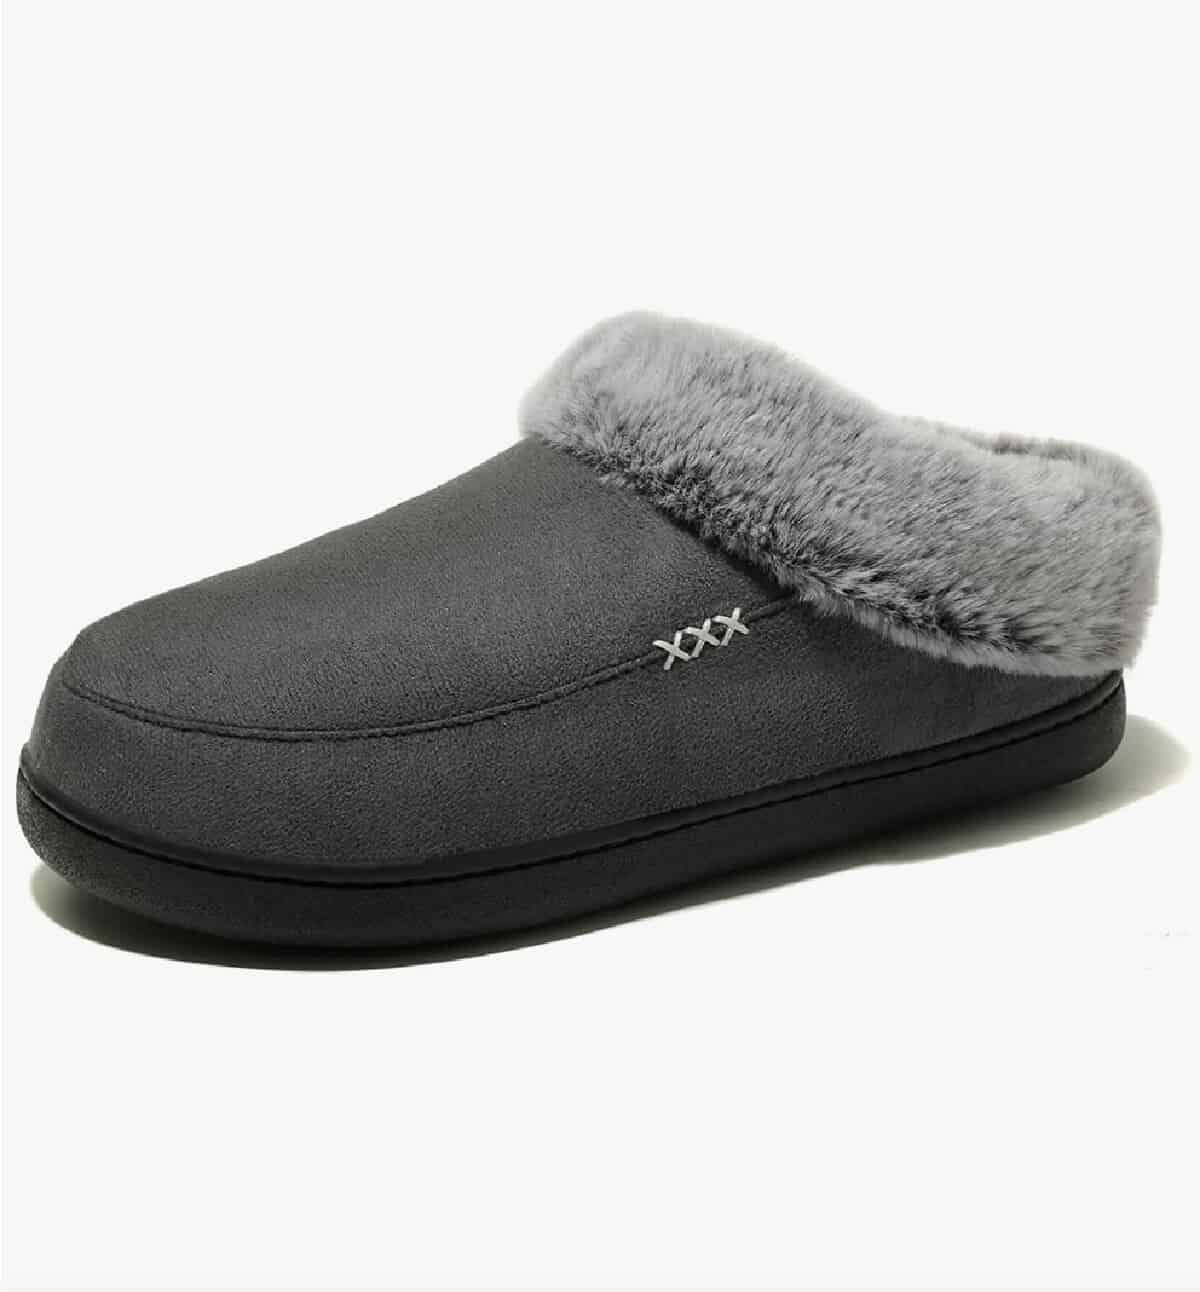 A single dark gray slip-on slipper in vegan suede and fleece with non-slip rubber sole. 